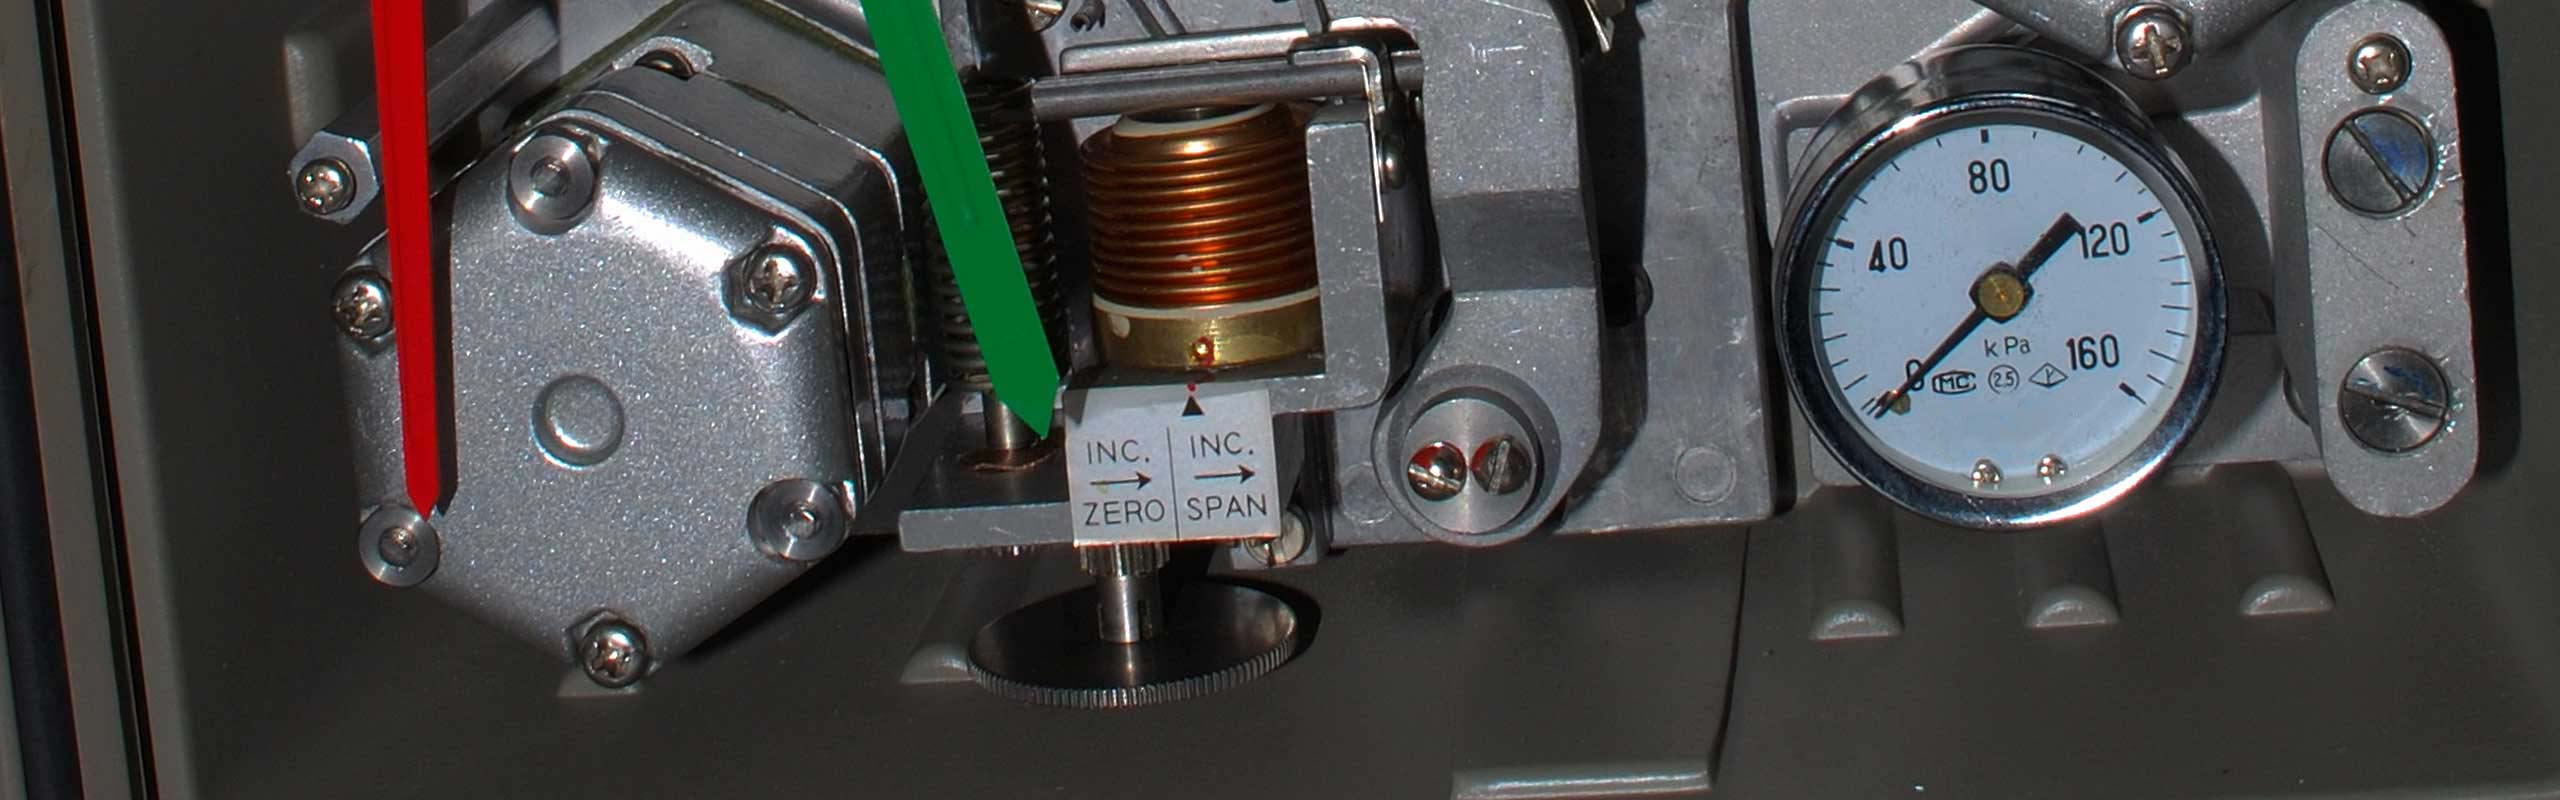 KKP 11/12/13/14 (High / Medium Gauge Pressure) Pneumatic Pressure Transmitter